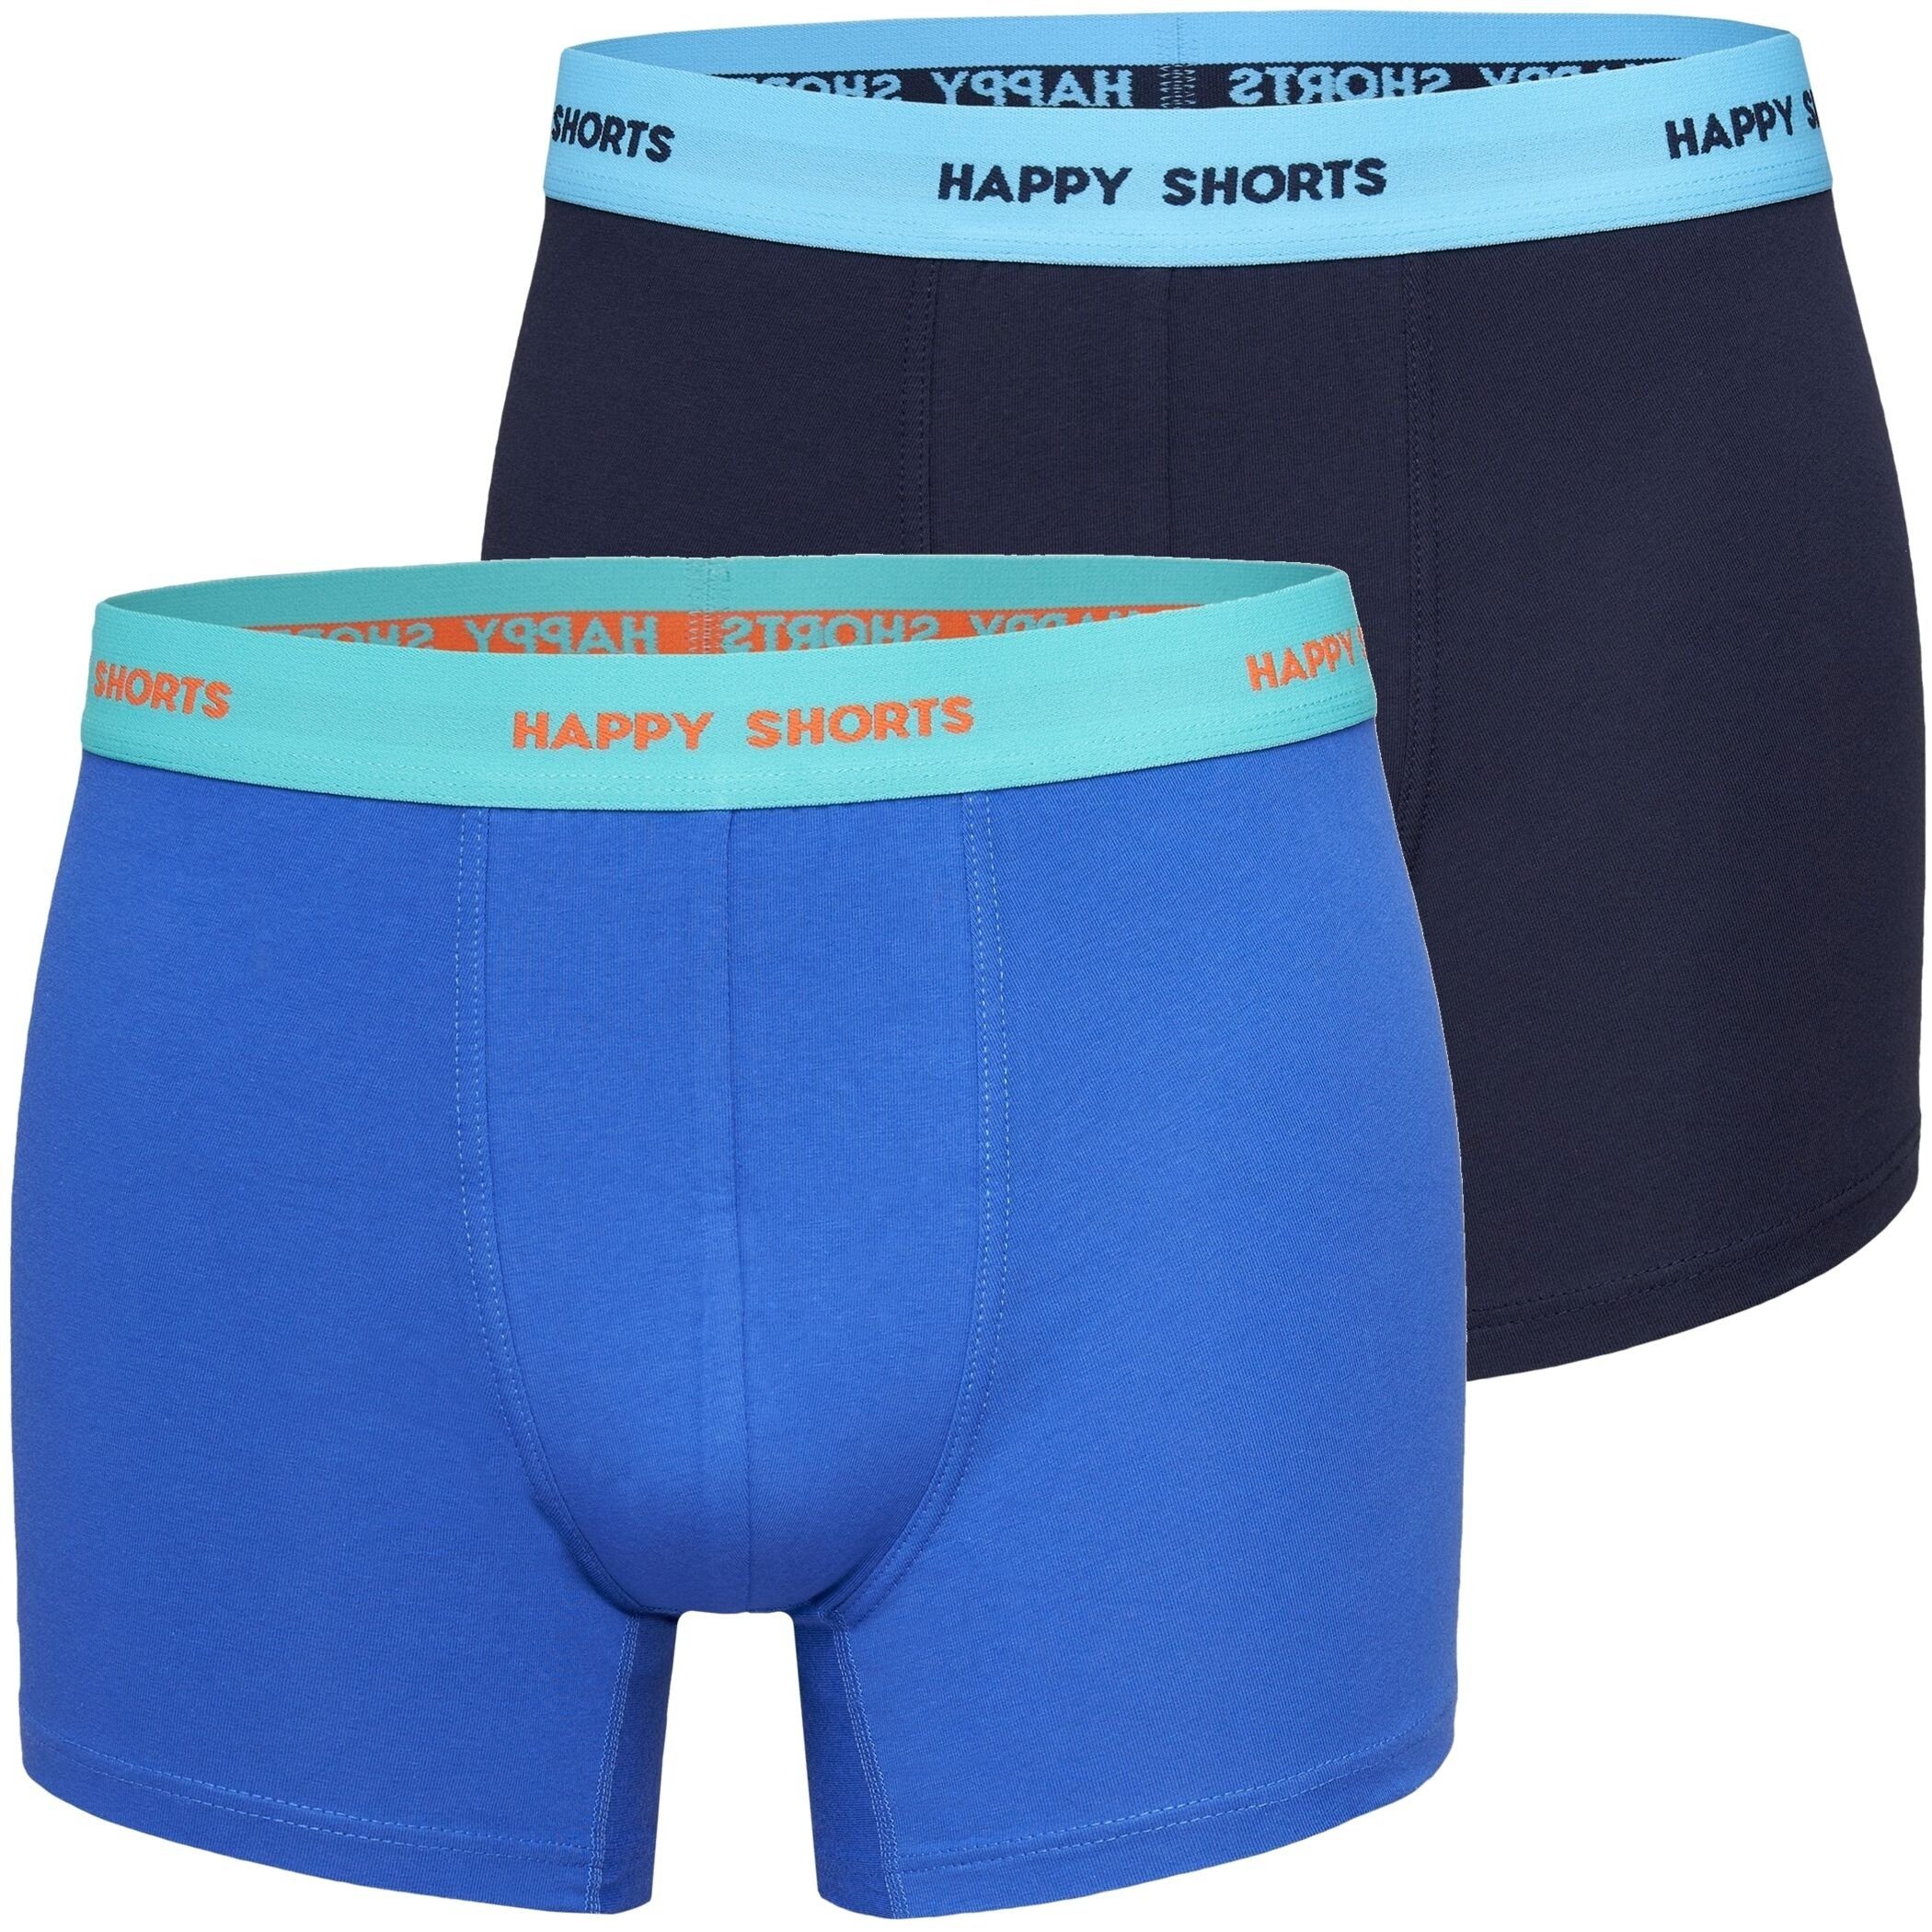 HAPPY SHORTS Trunk 2 Happy Shorts Jersey Trunk Herren Boxershorts Boxer Pant Blau Navy (1-St) Uni 1